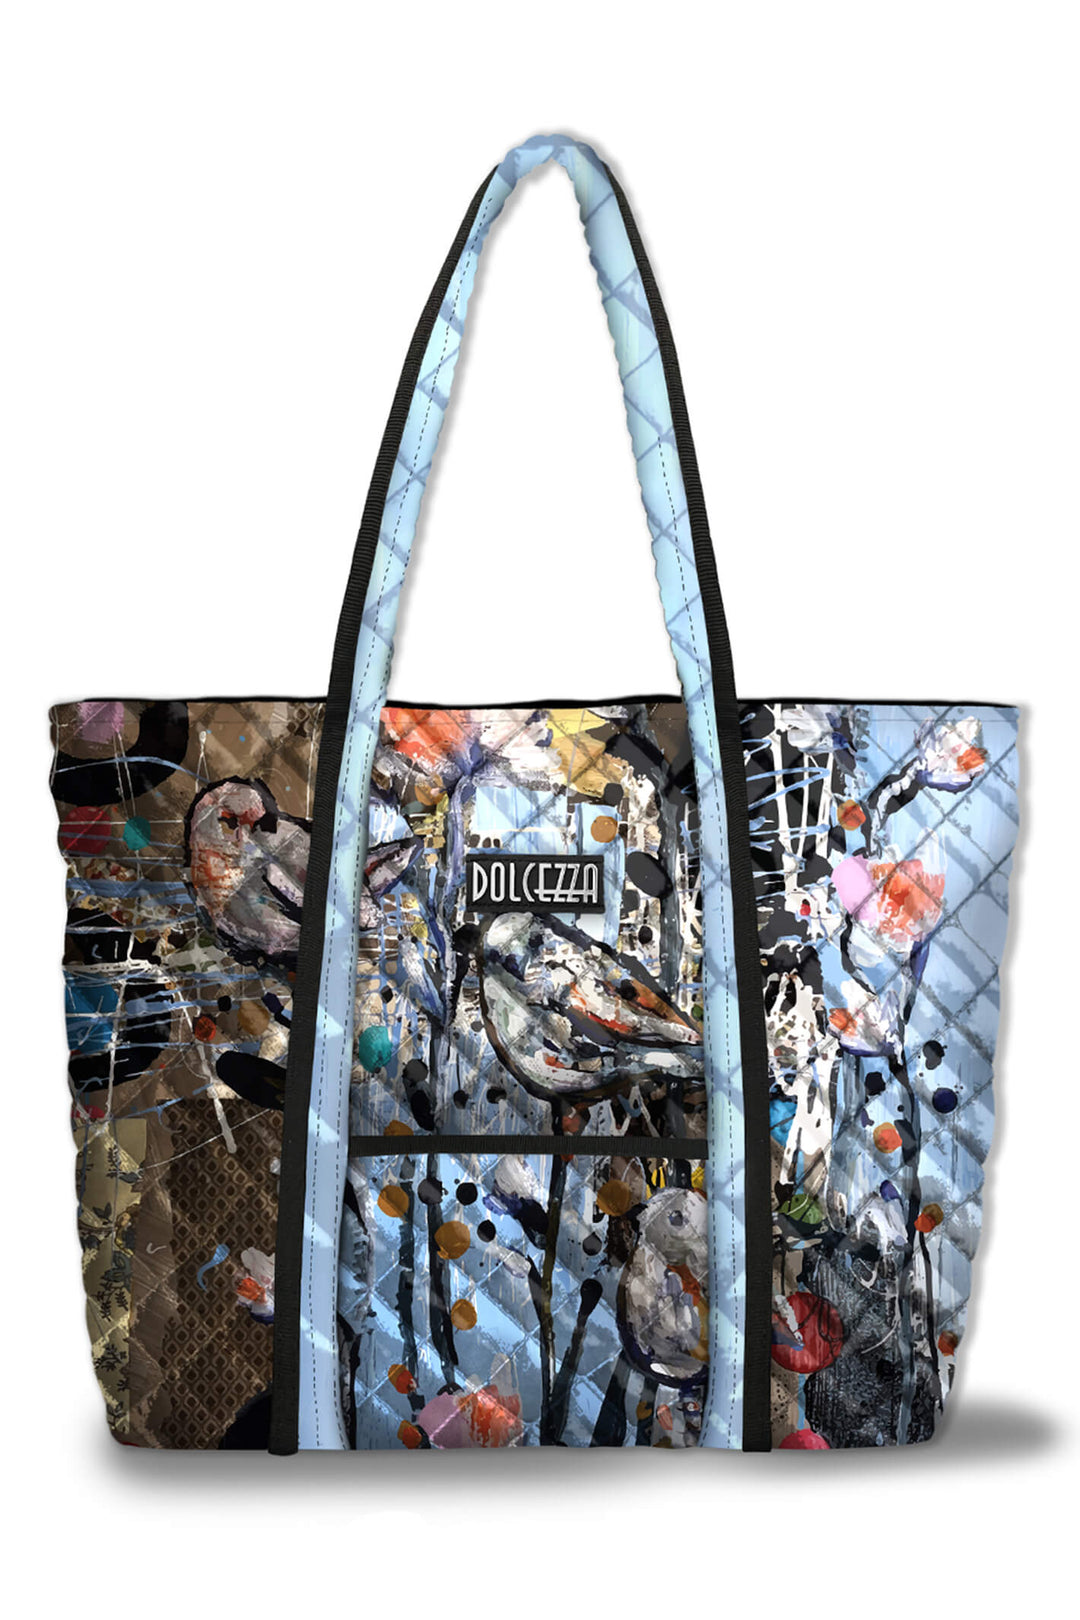 Dolcezza 73954 Randi Antonsen Stripar Print Bag - Experience Boutique